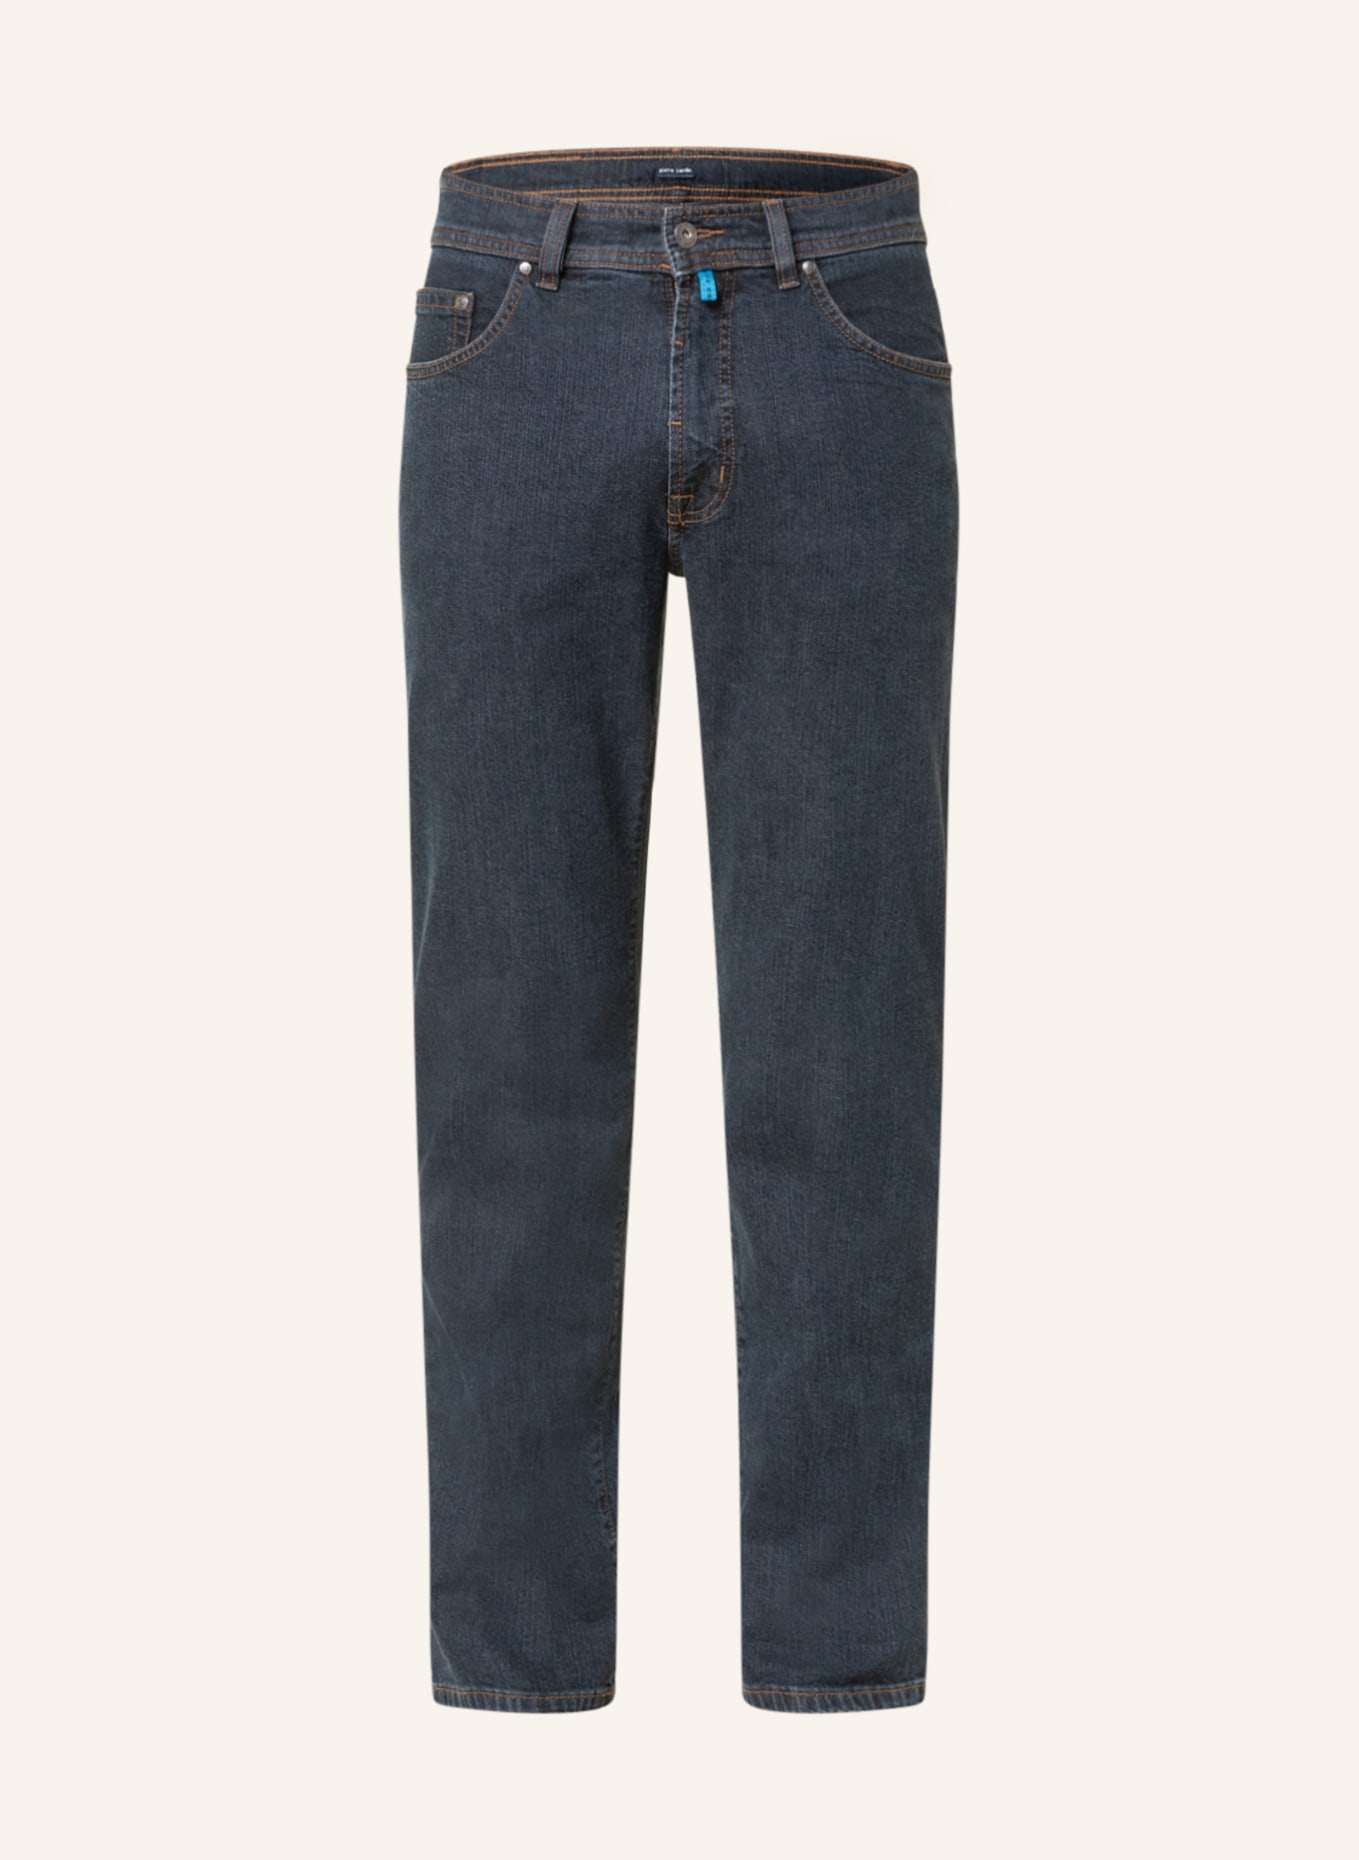 pierre cardin Jeans DIJON Comfort Fit , Farbe: 6811 dark blue stonewash (Bild 1)